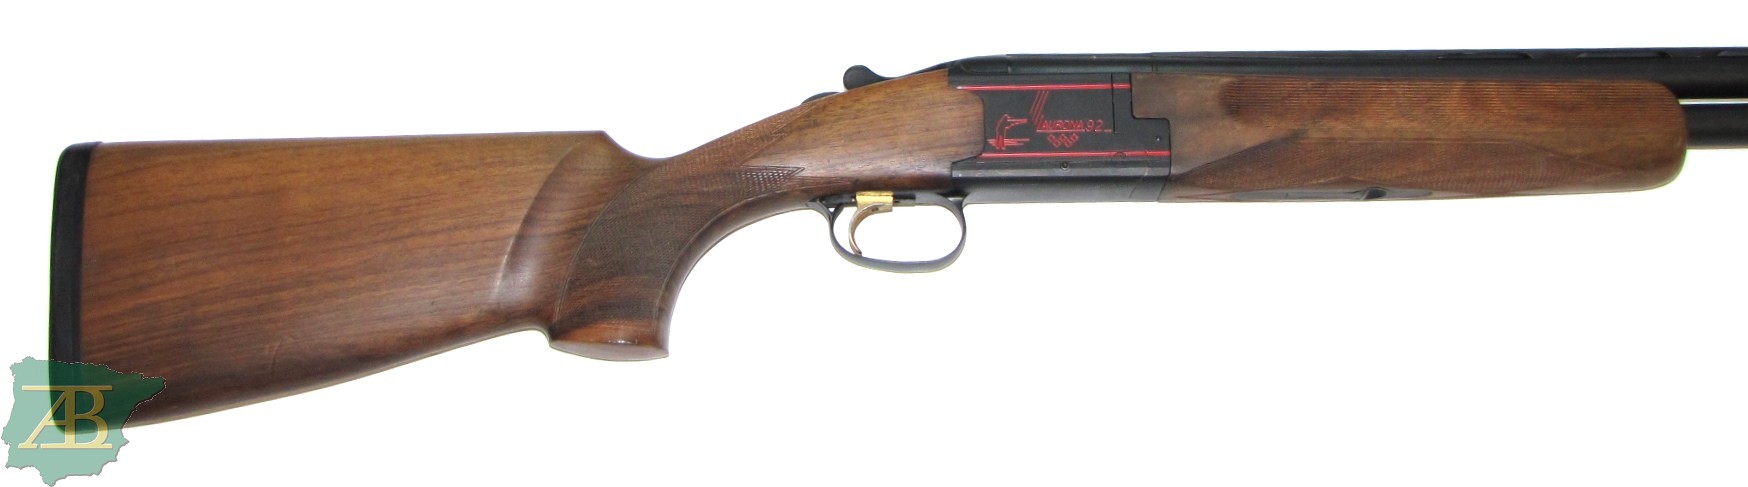 Escopeta superpuesta de TRAP LAURONA 92 Ref 3247-armeriaiberica-2